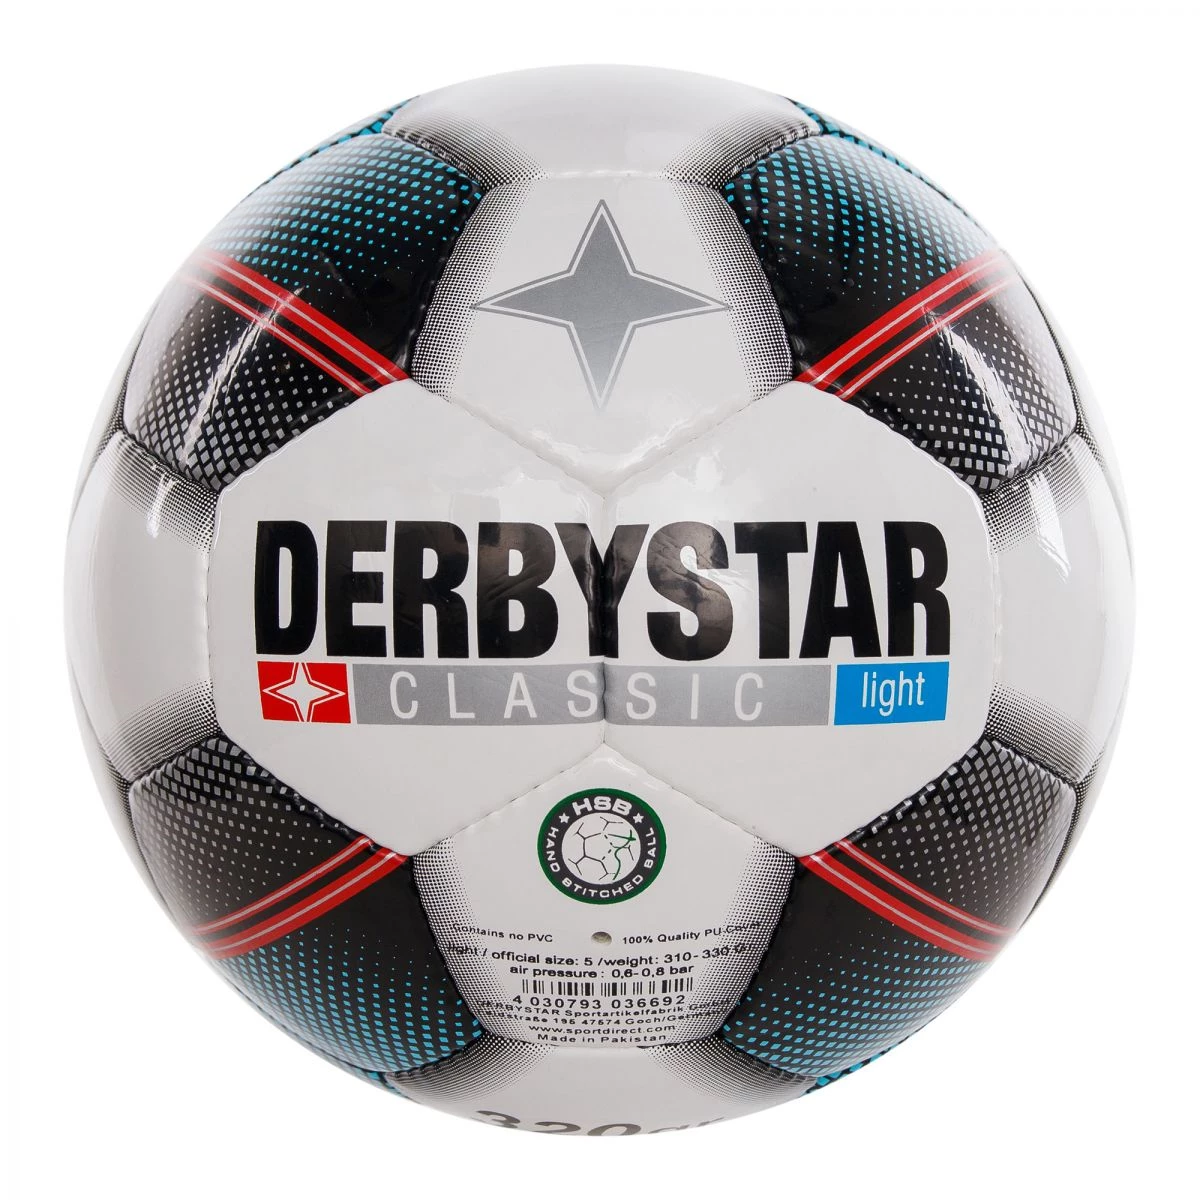 Derby Star Classic Light 320 GR. Voetbal